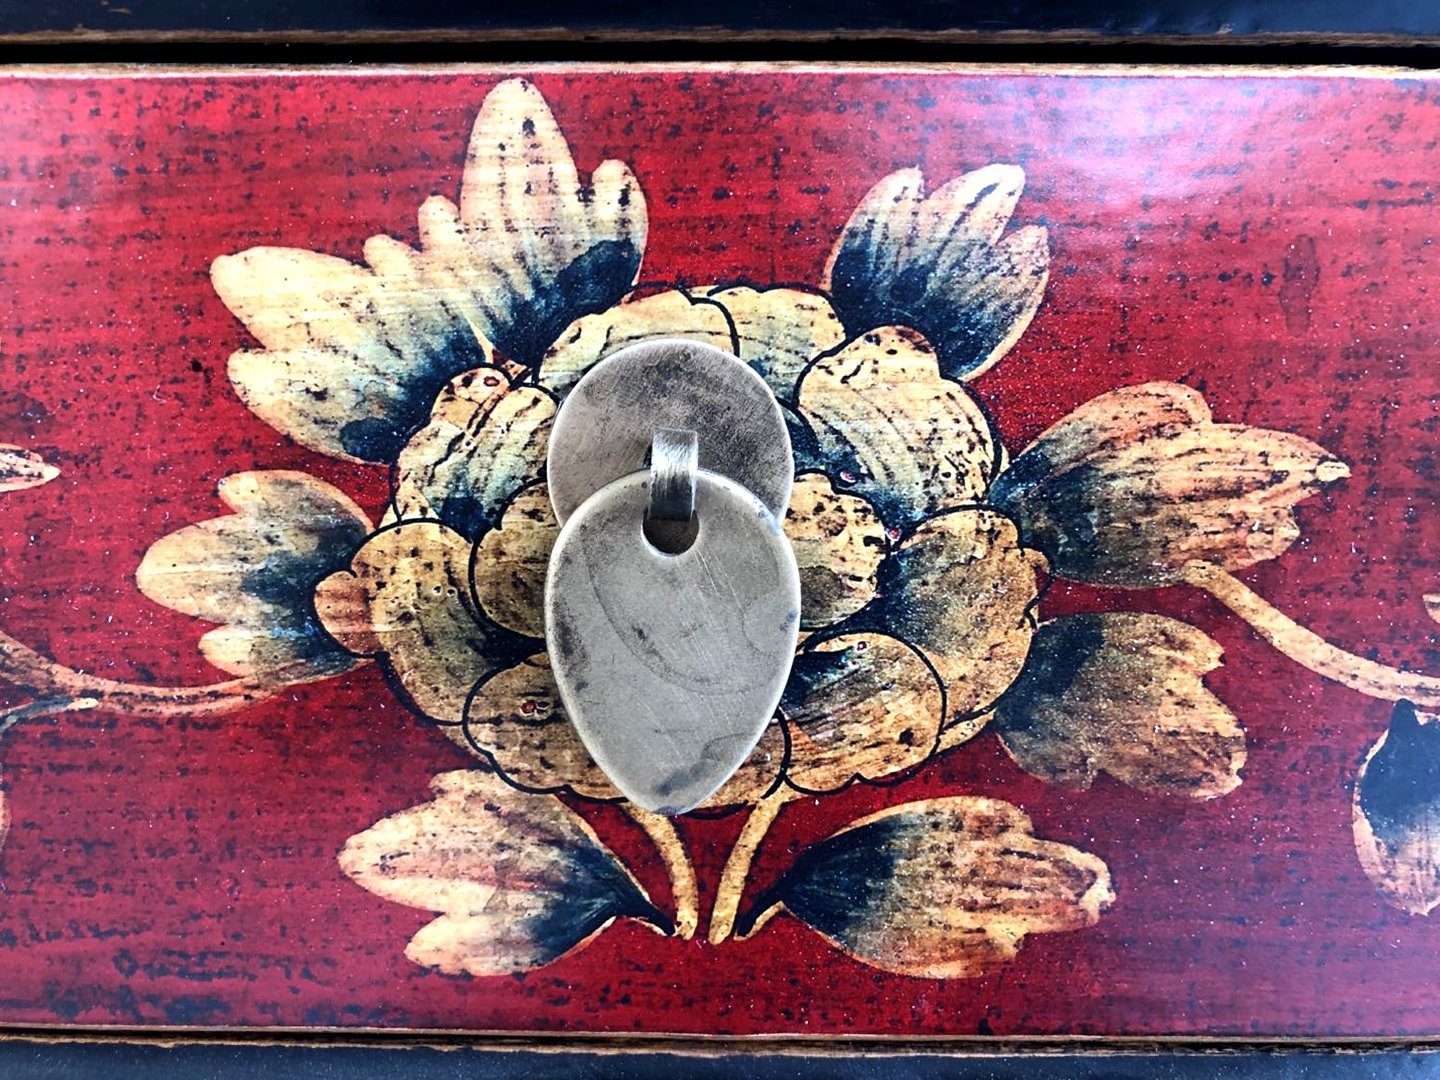 Oriental chest of drawers sideboard "RedMagic" - Art. 34372-7